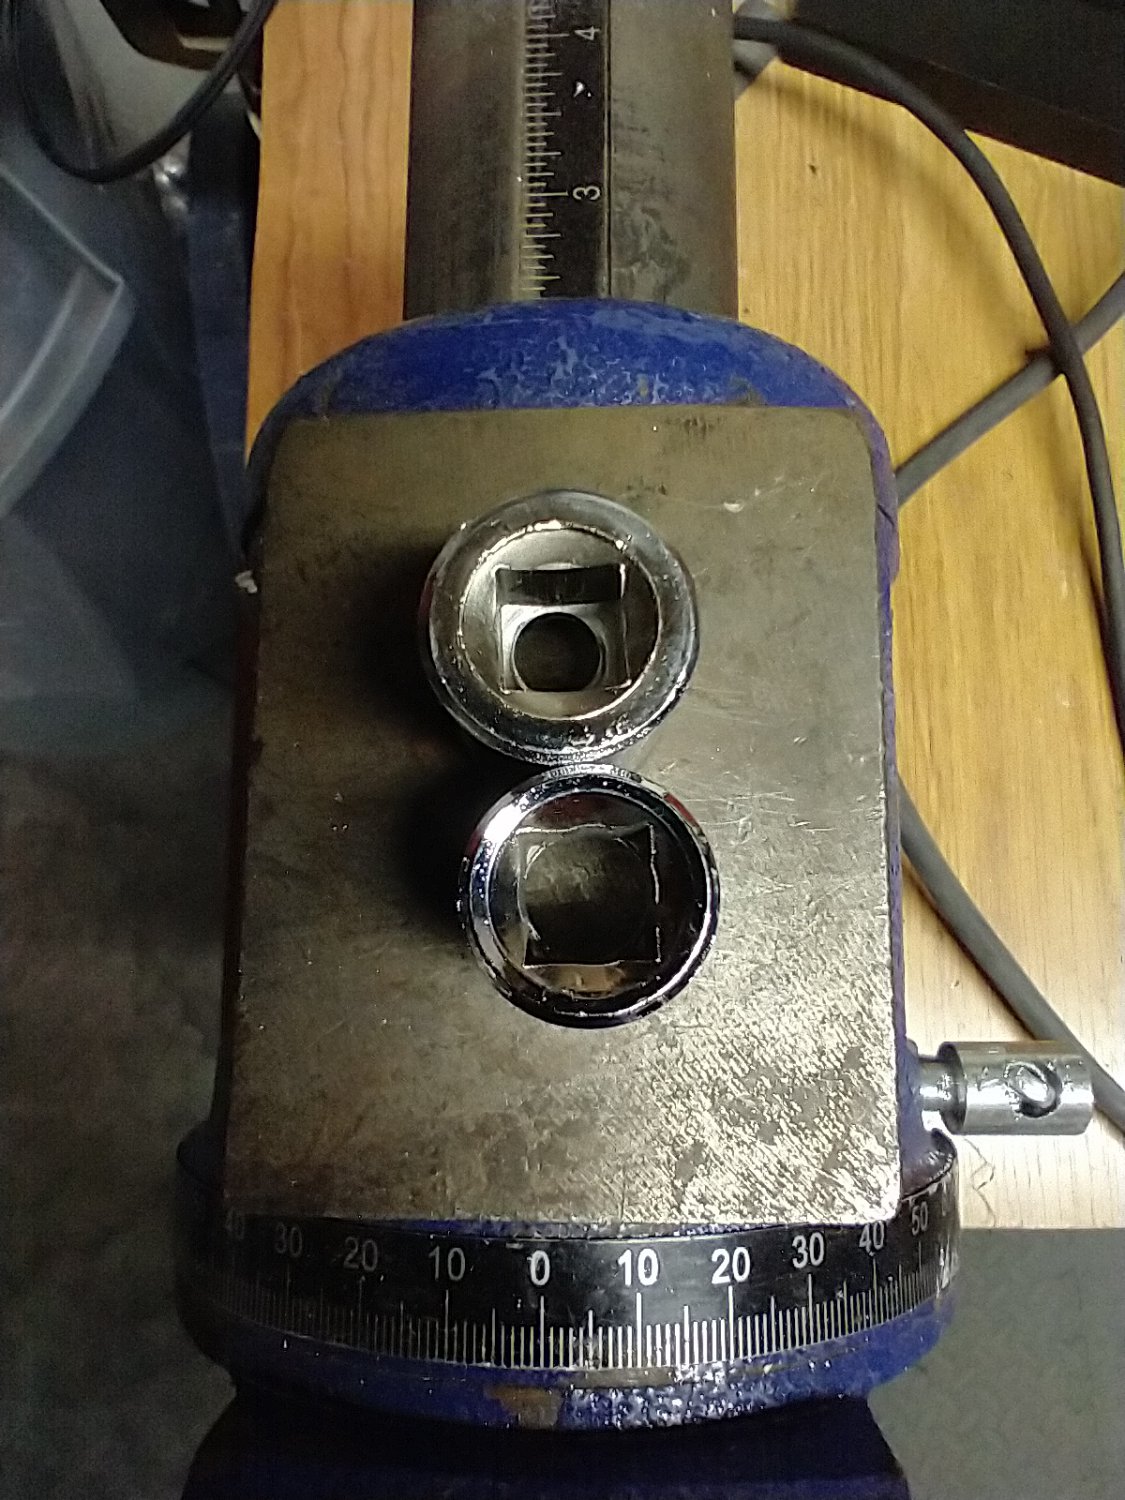 3 Table Top Masking Tape Dispenser (can hold multiple rls)